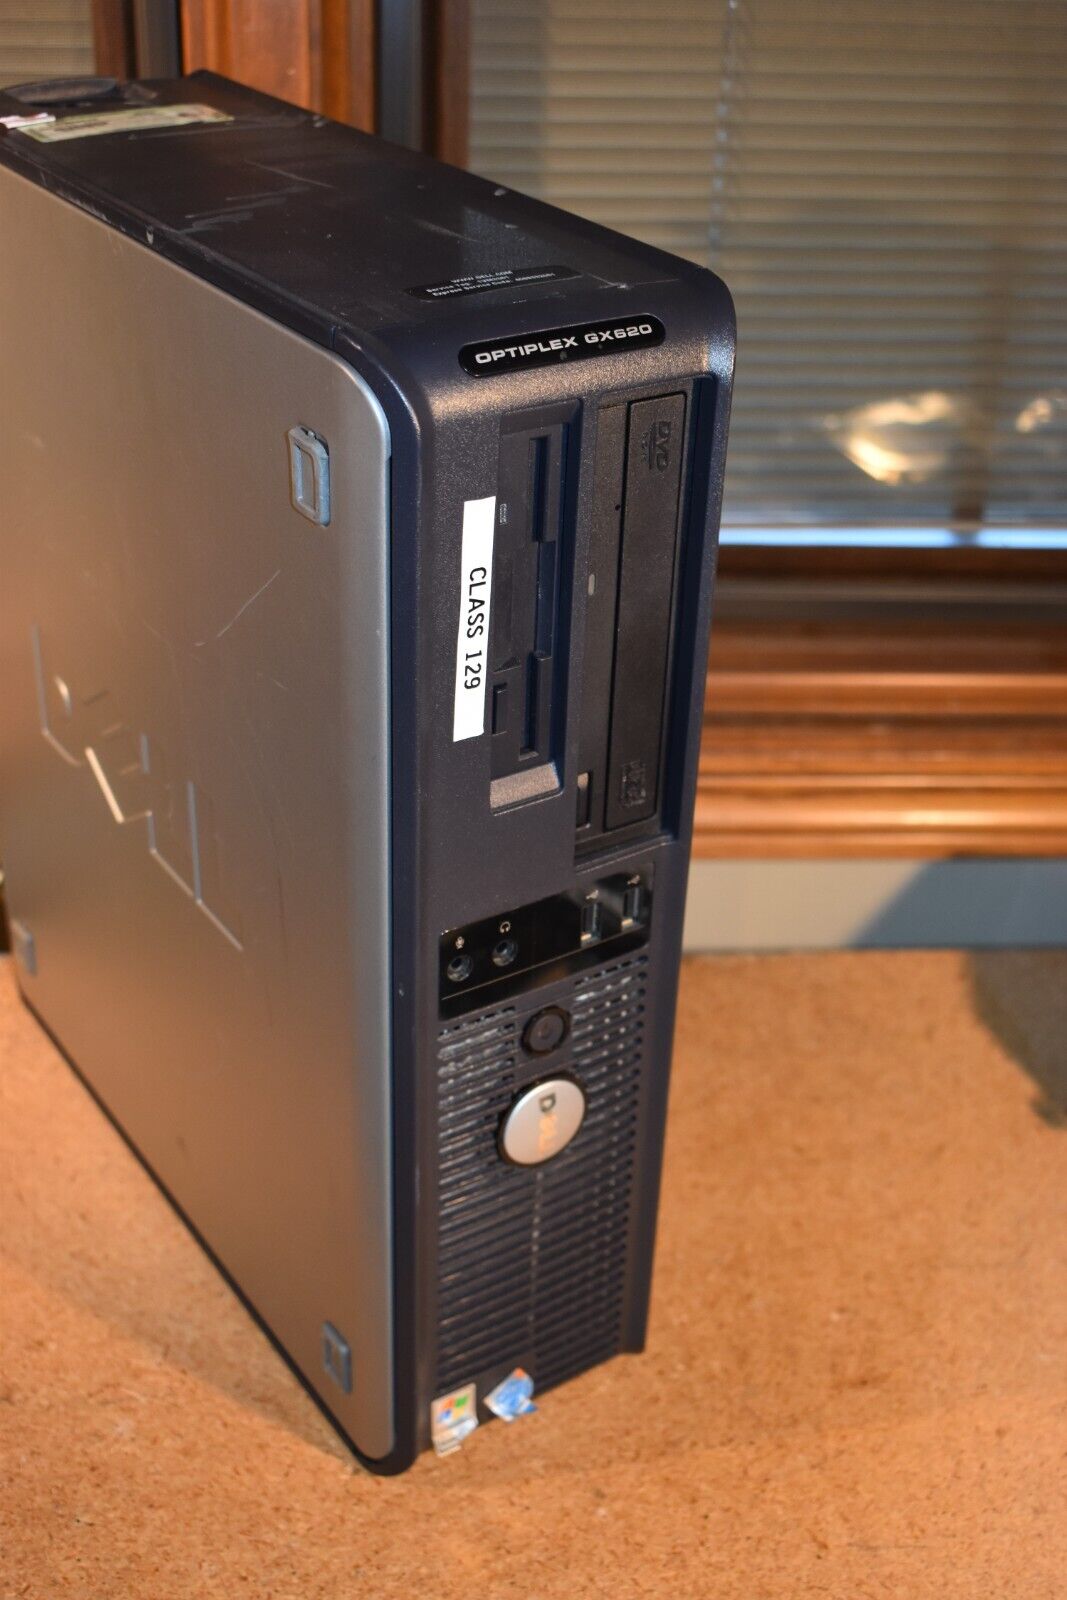 Dell Optiplex GX620 Desktop Pentium 4 3.4GHz 3GB 500GB Windows XP Floppy Drive